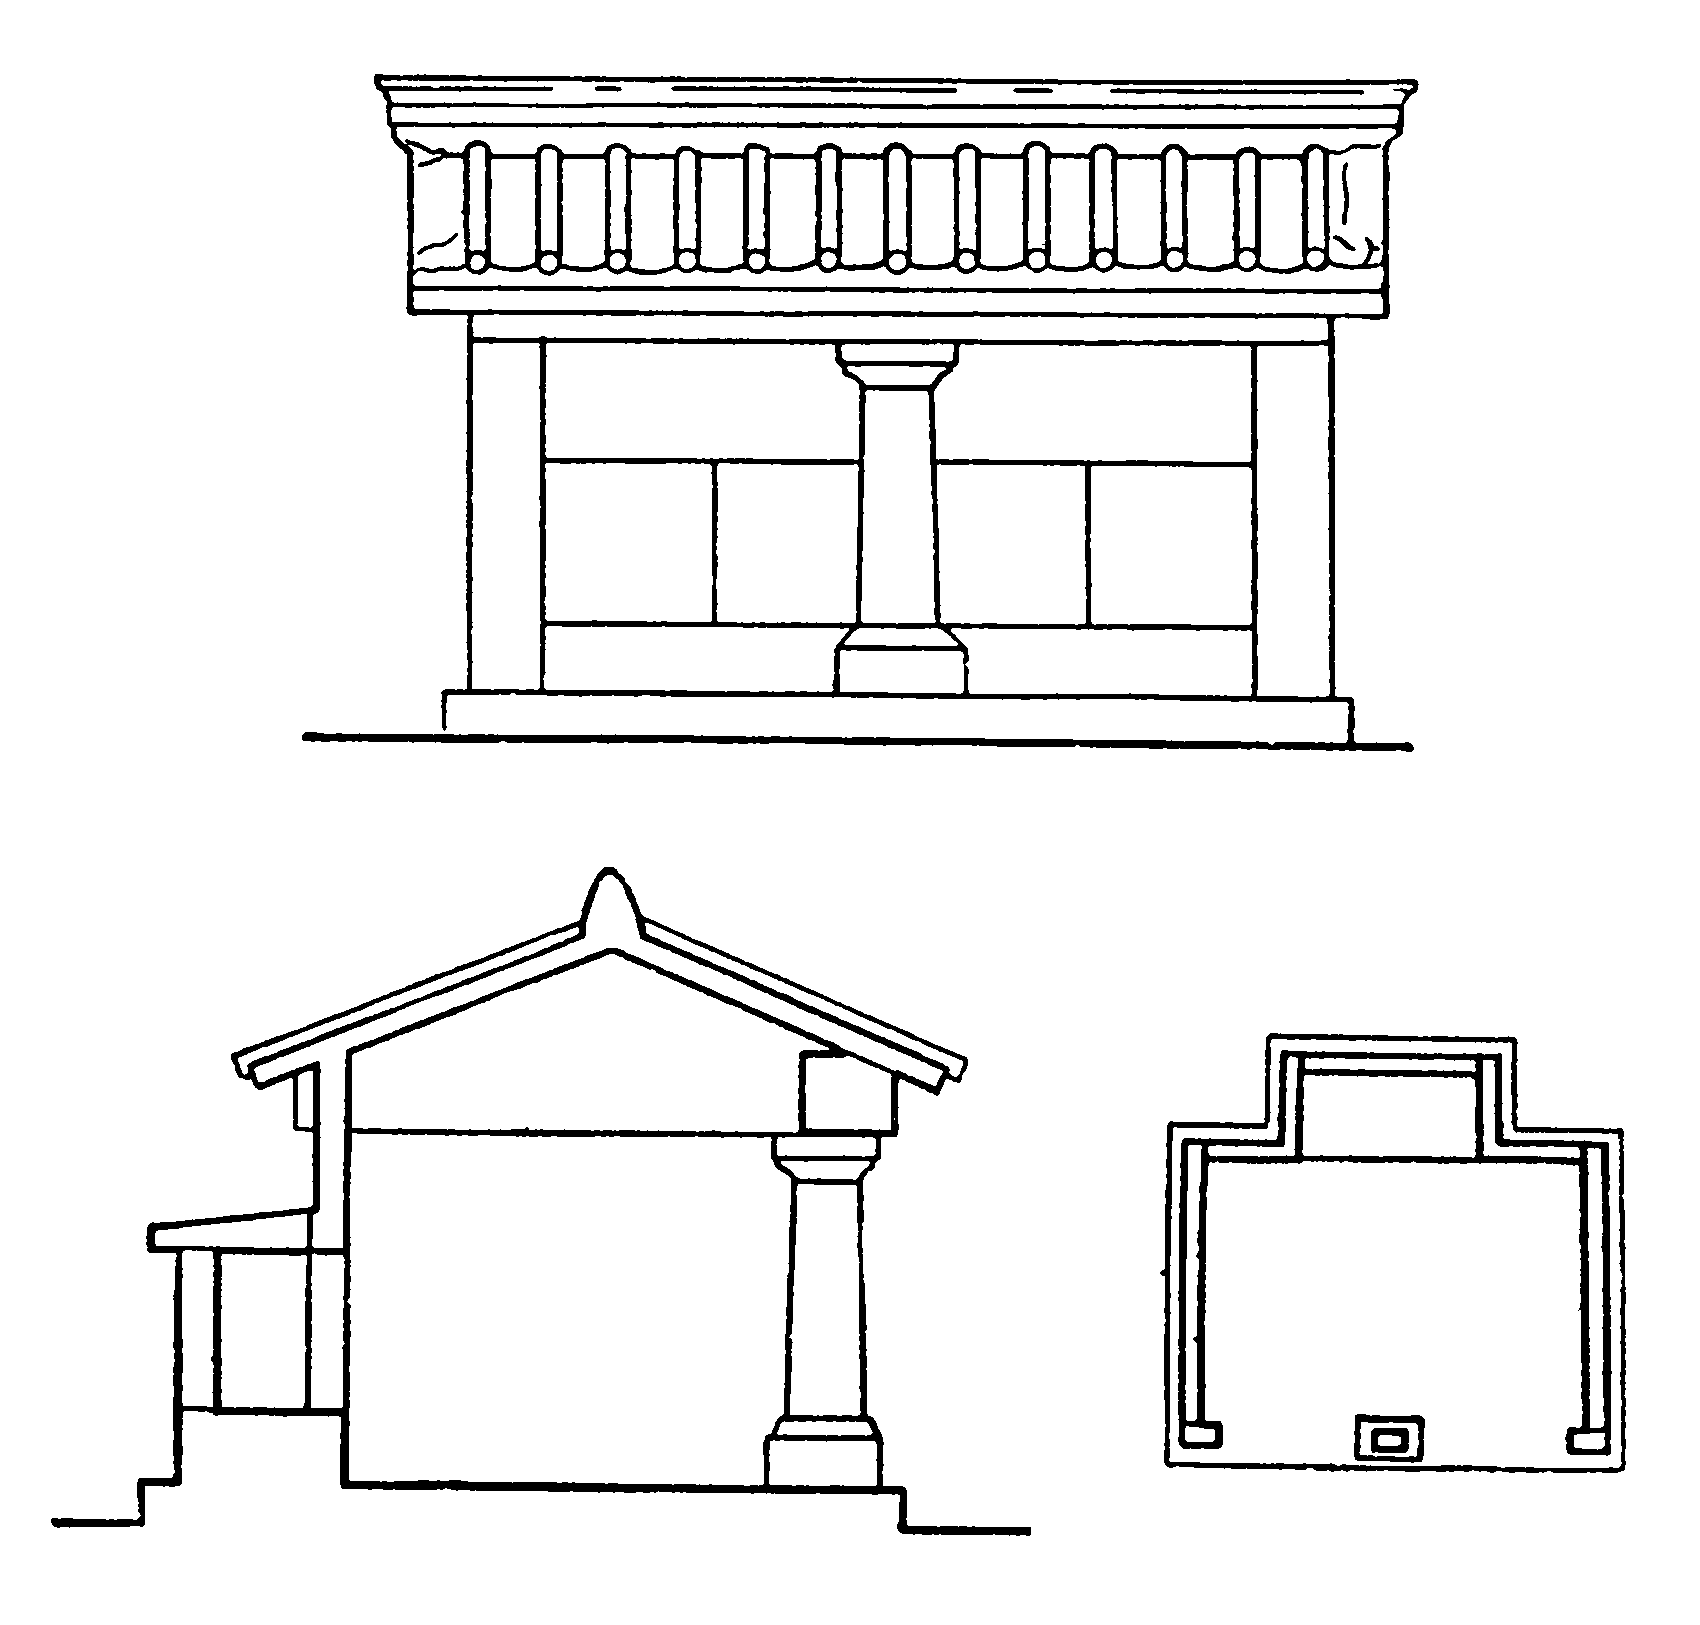 13. Шаньдун, провинция. Храм перед погребением, II в. Фасад, разрез и план